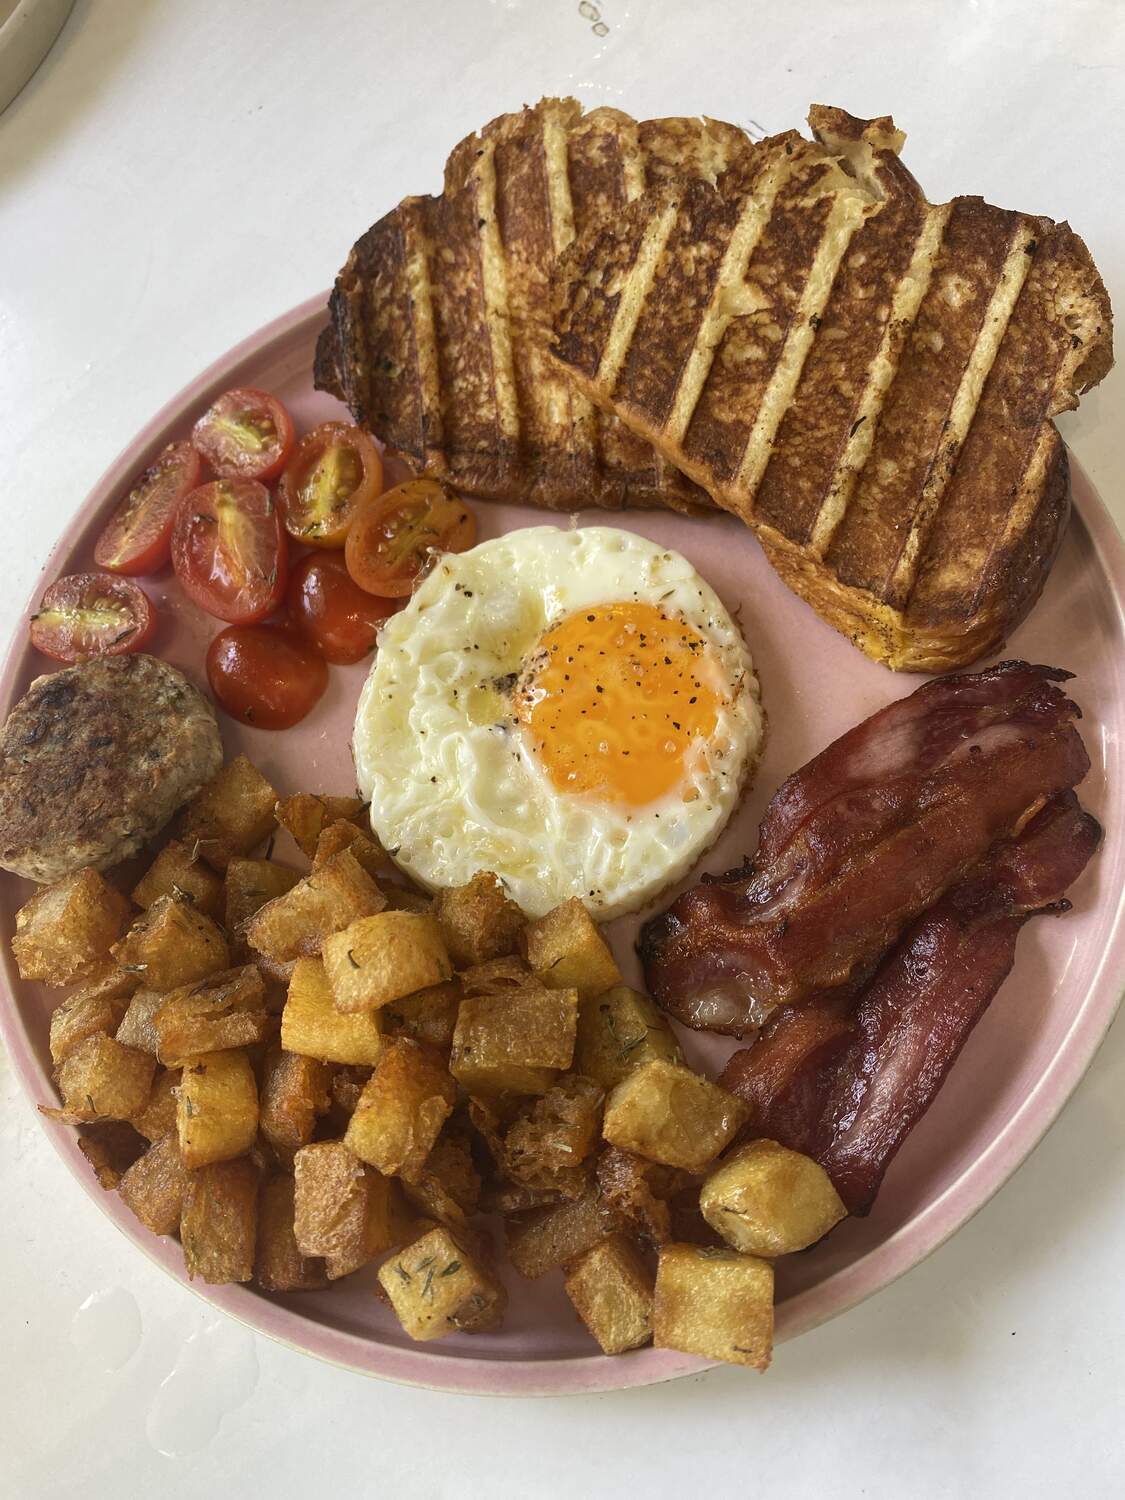 Full English breakfast plate at Jeremy Kitchen